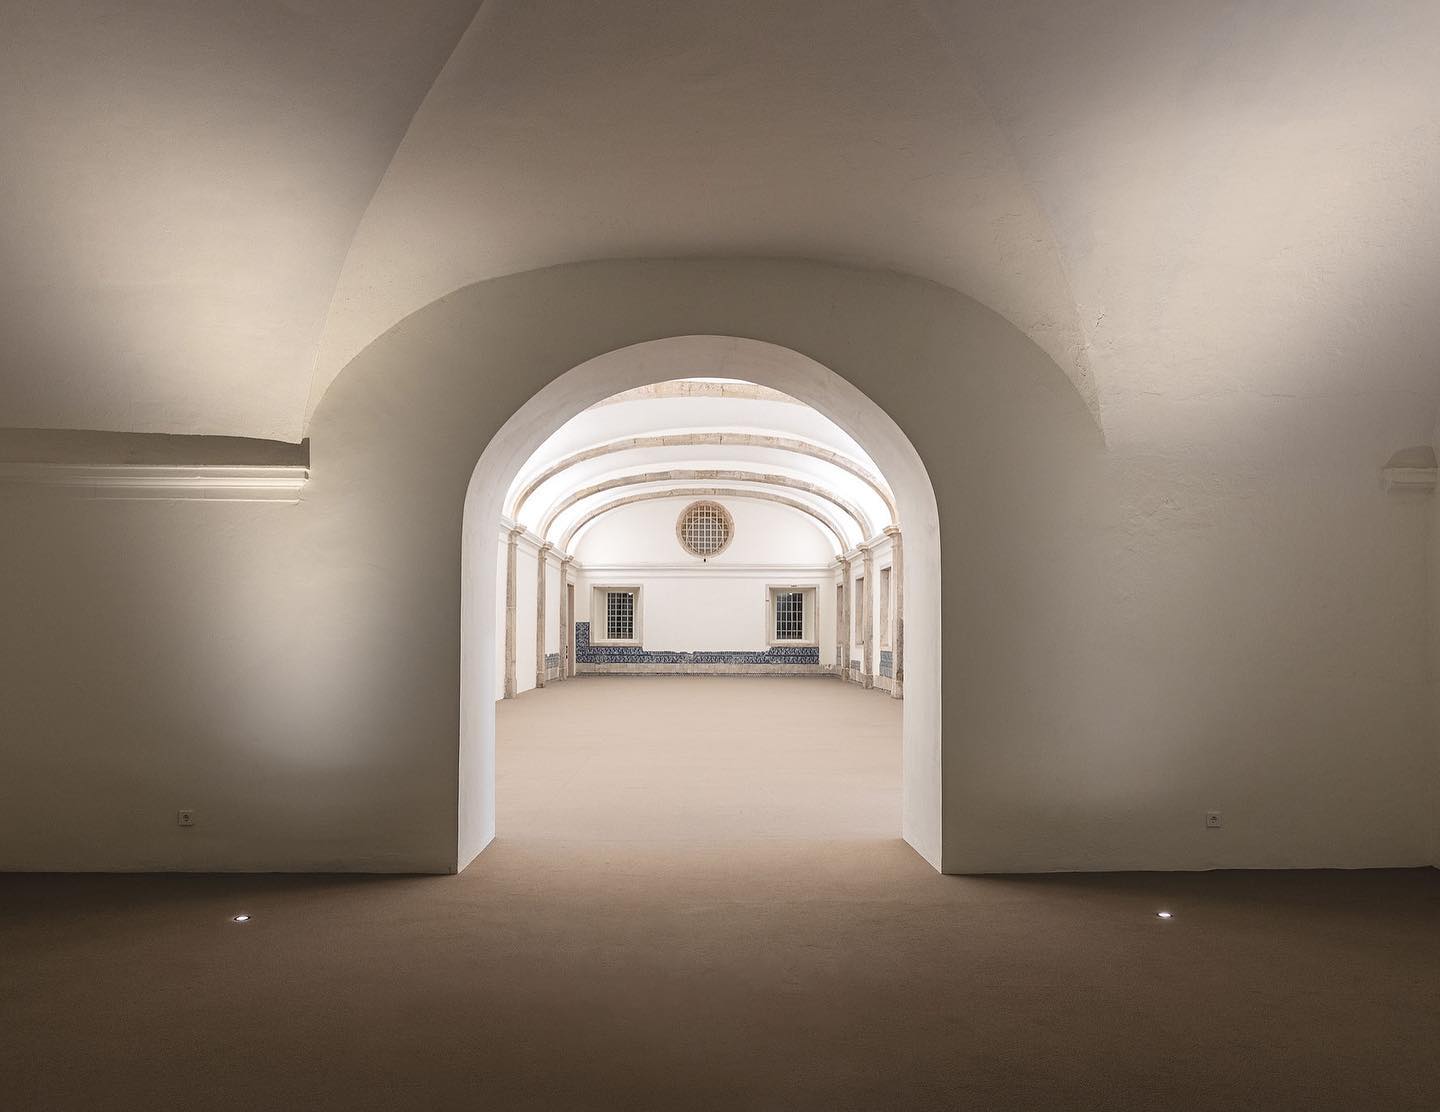 Convento do Beato, Centro de Eventos #architecture by @riscoarquitectura #lightingdesign by Filamento #photography by Carolina Delgado